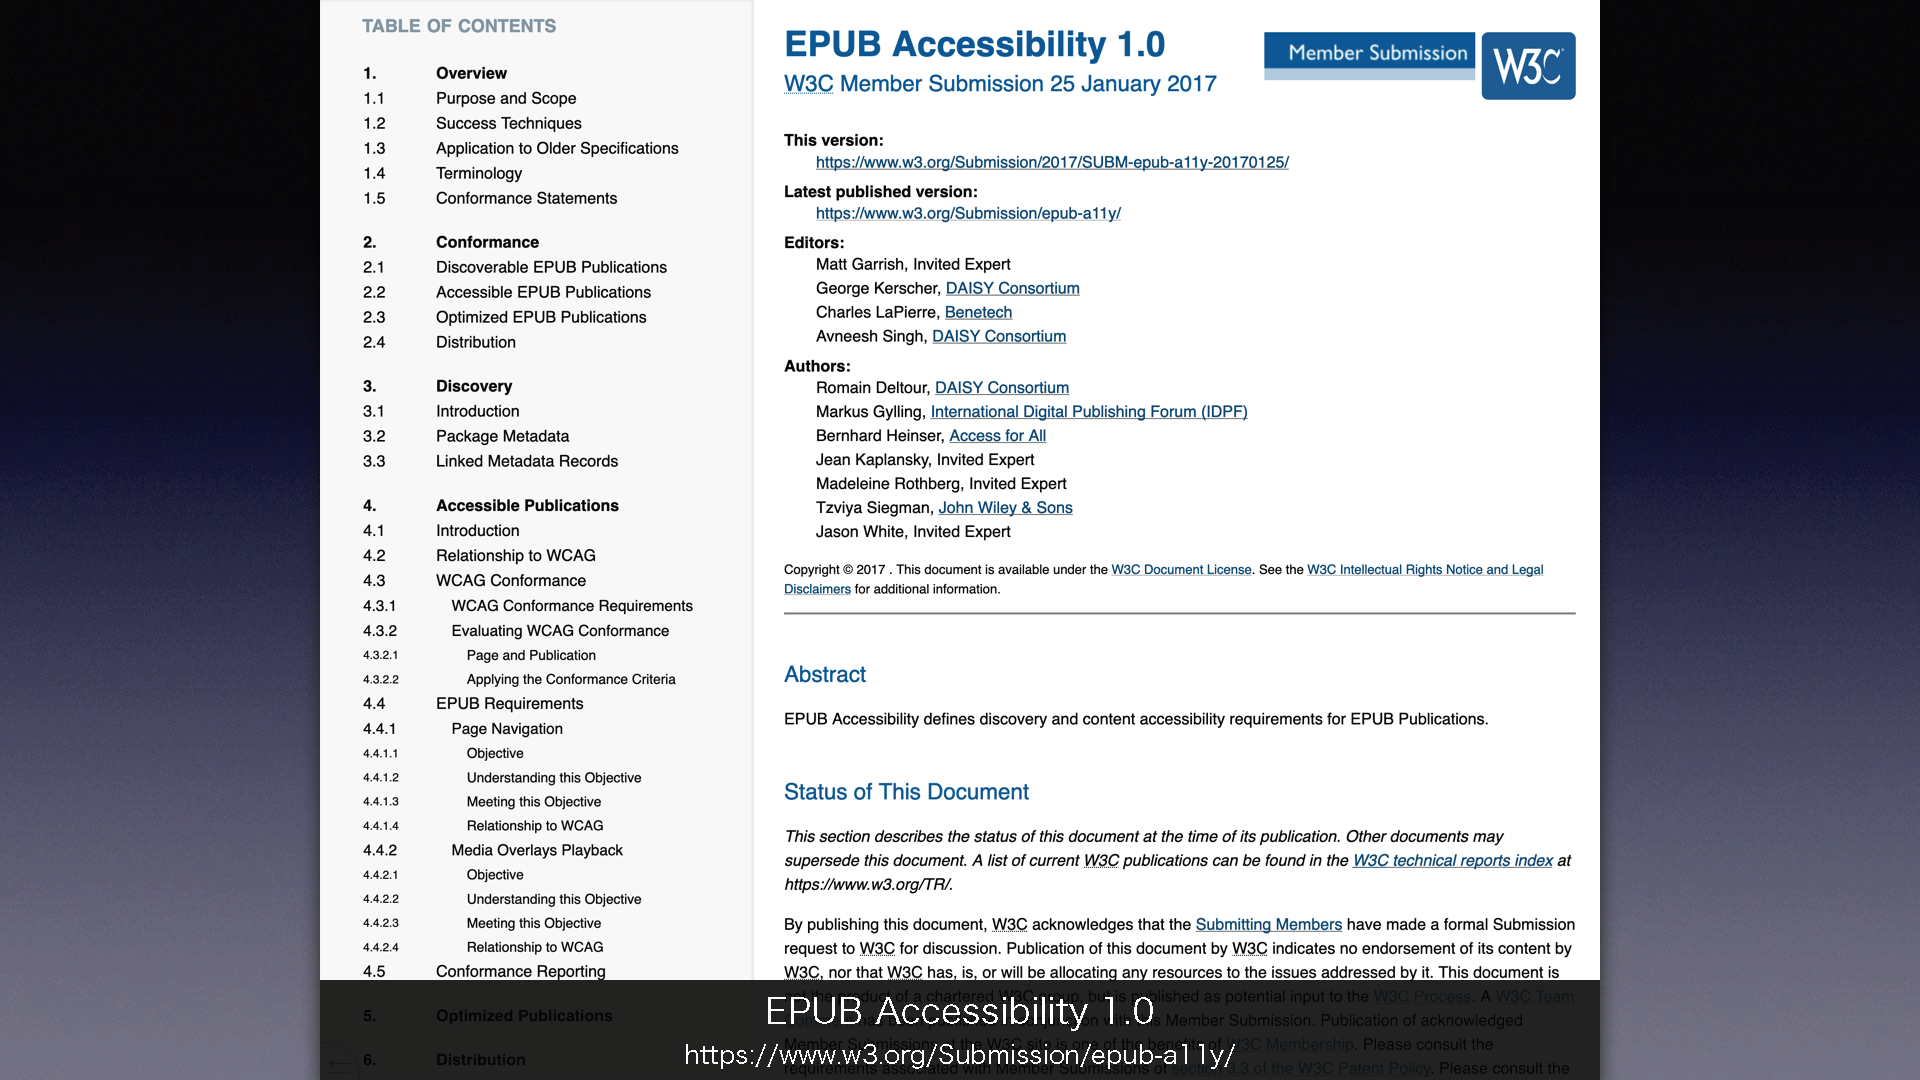 「EPUB Accessibility 1.0」について掲載されたウェブページの画像
	